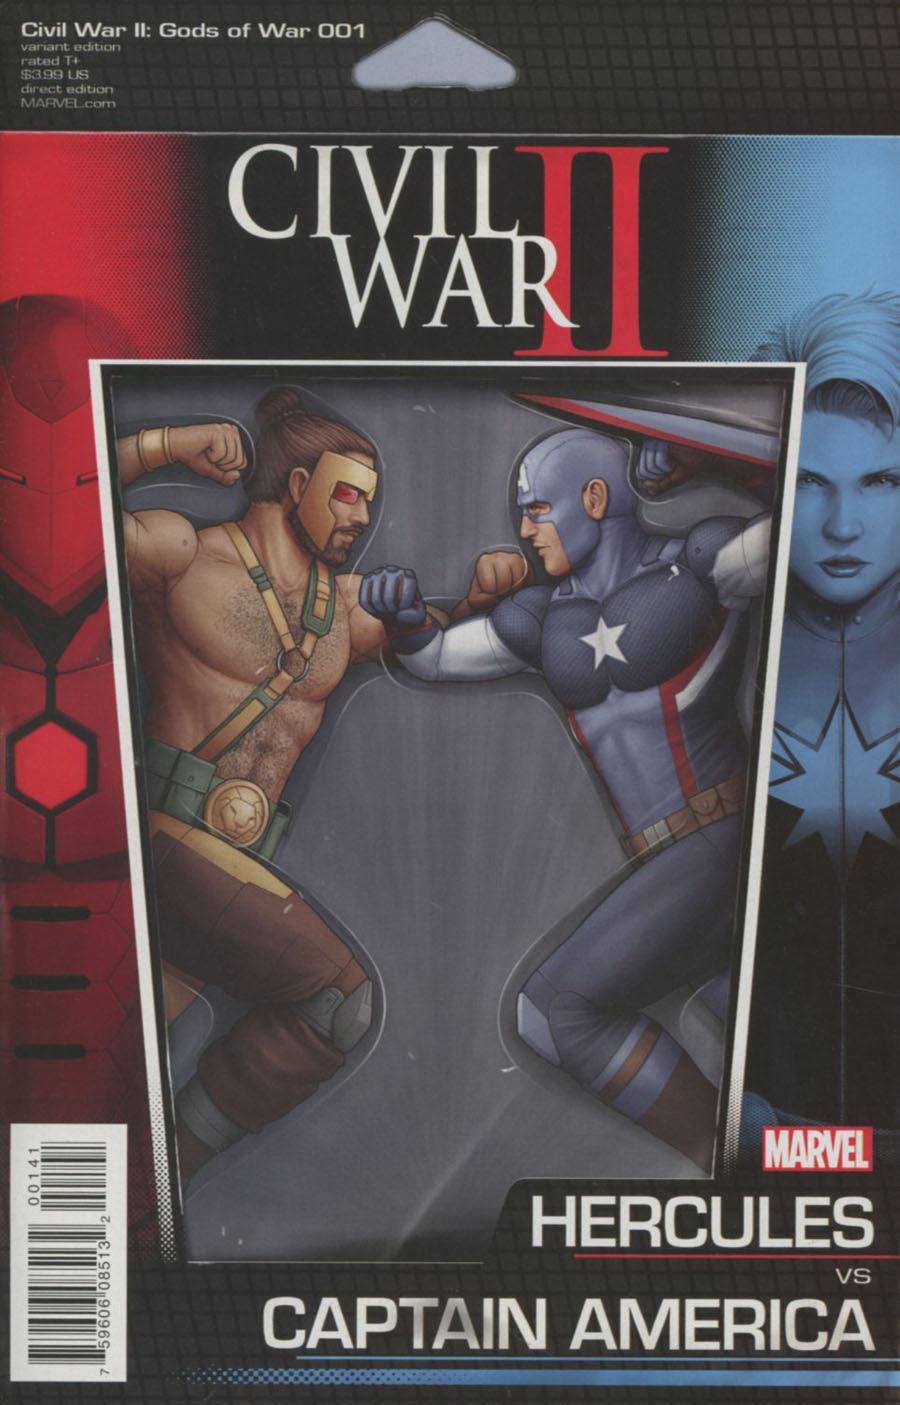 CIVIL WAR II GODS OF WAR #1 CHRISTOPHER ACTION FIGURE - Kings Comics